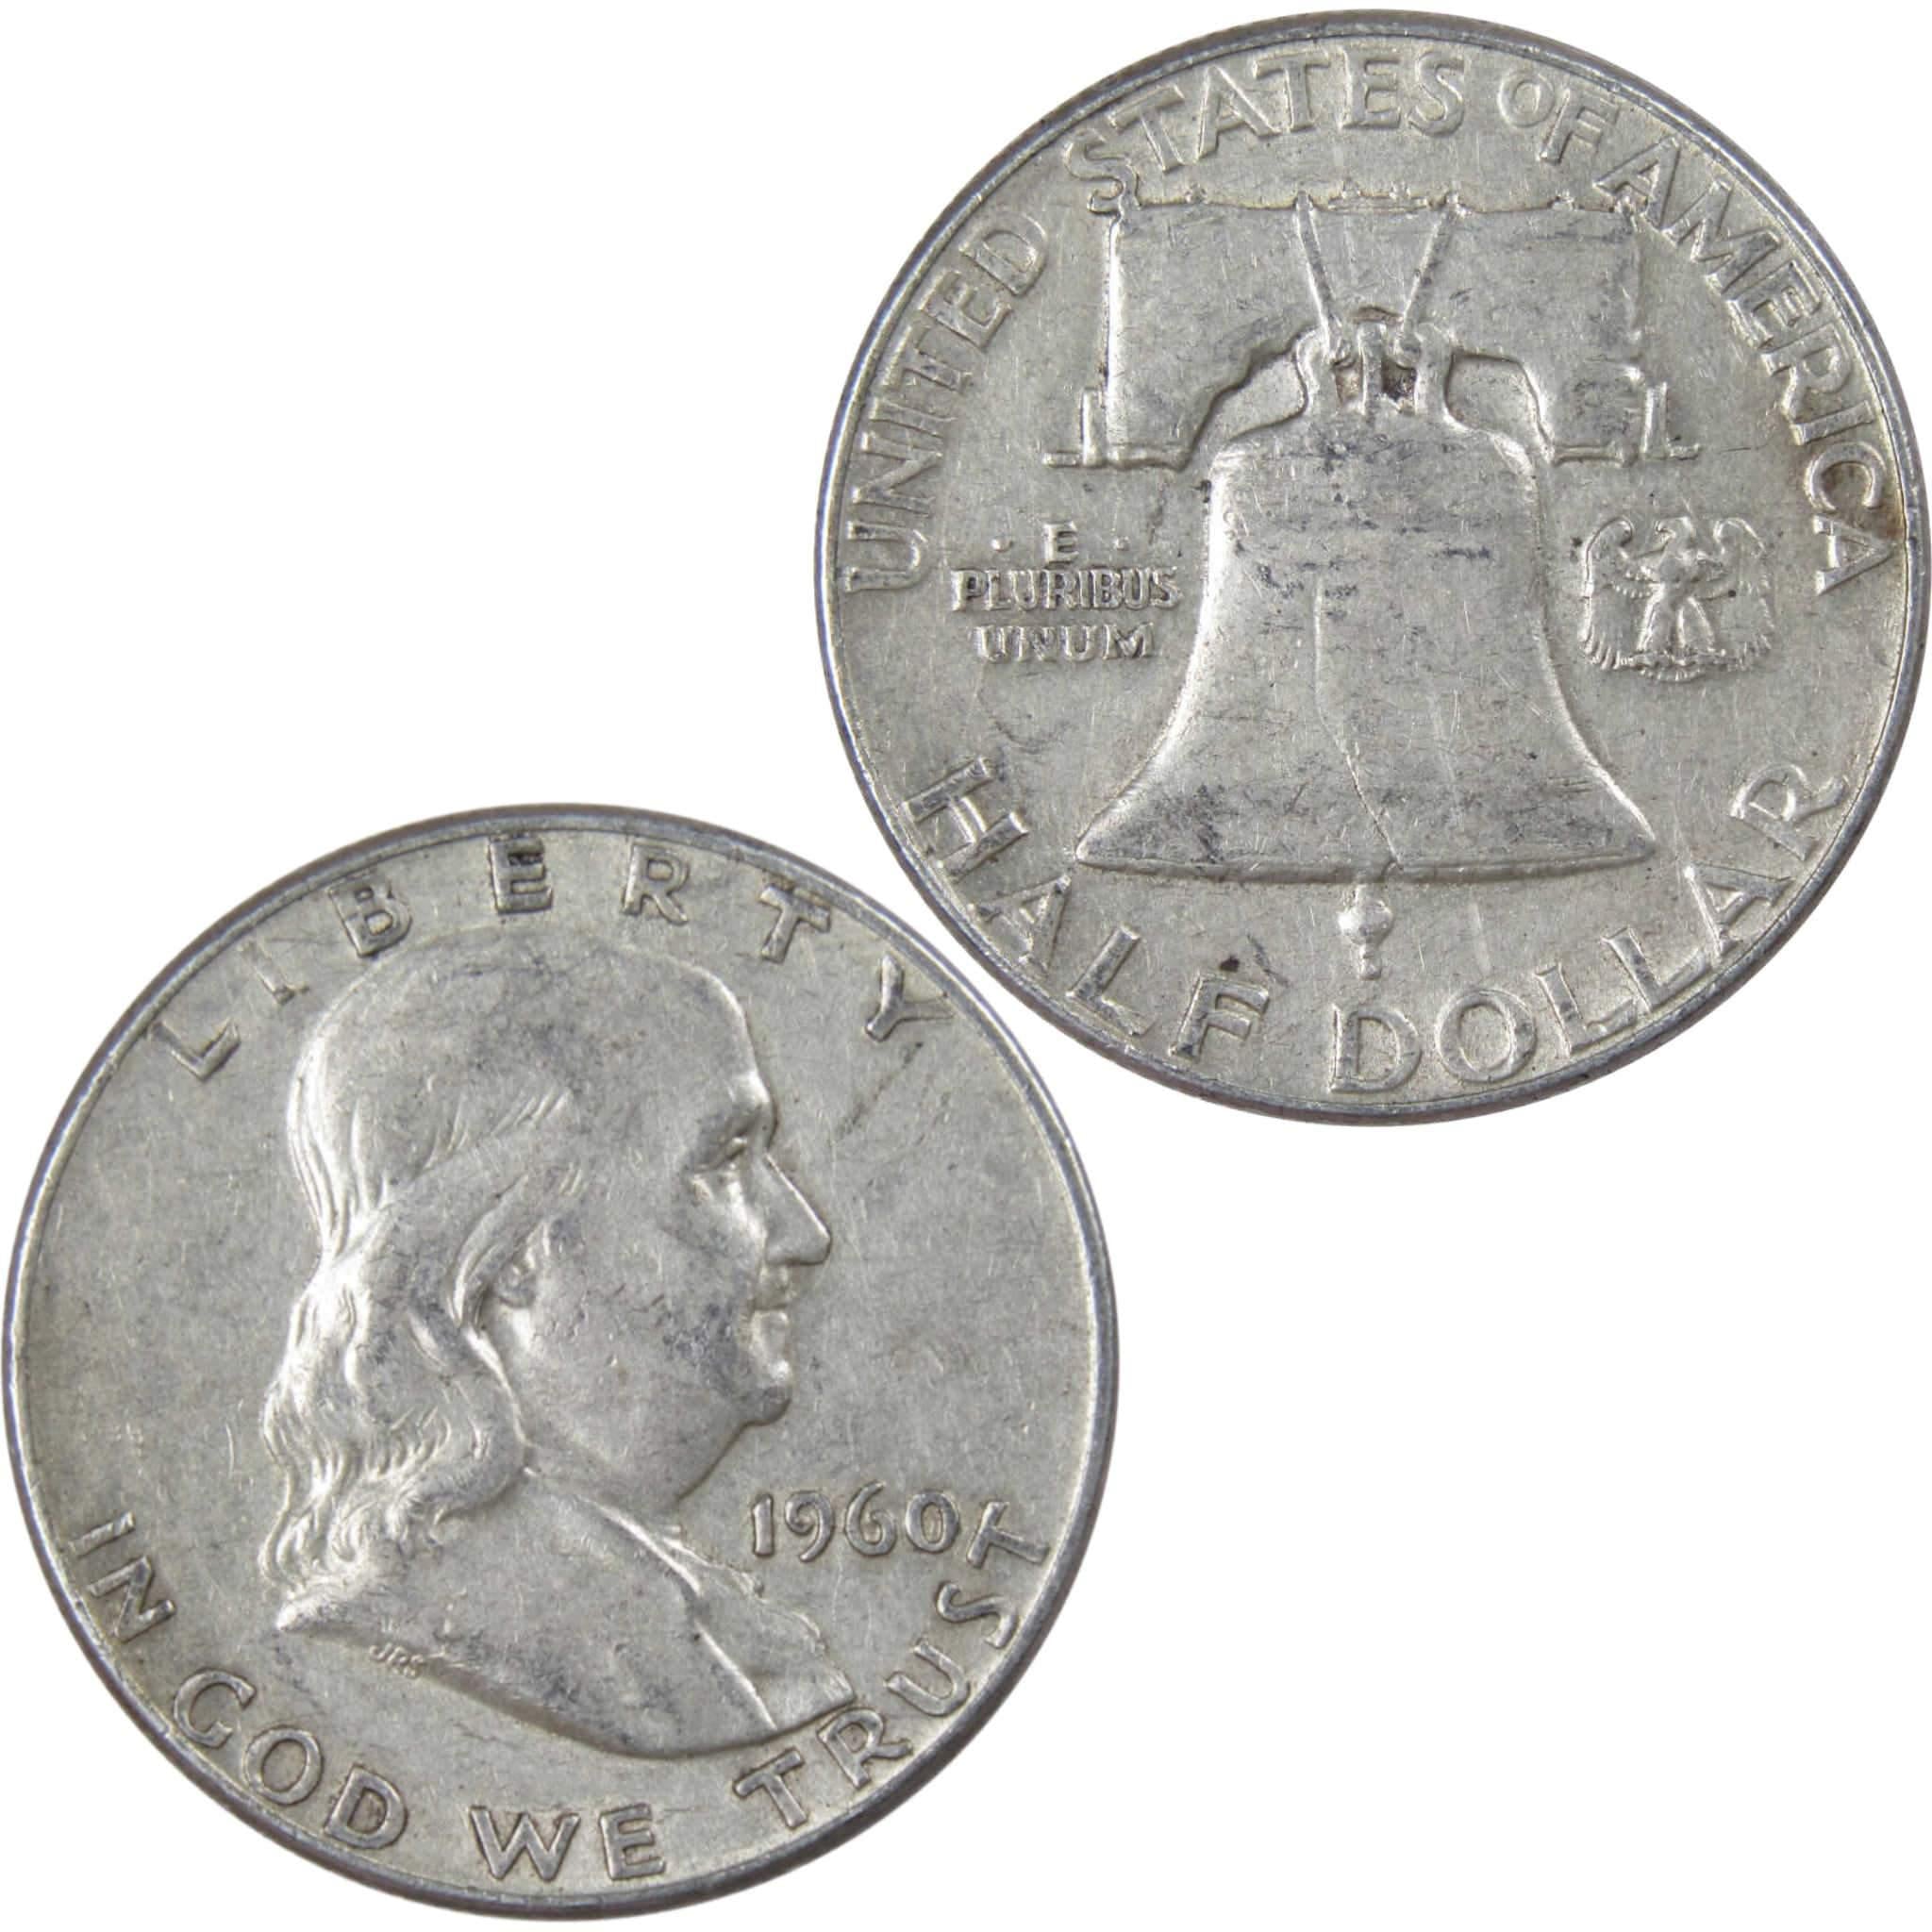 1960 Franklin Half Dollar VF Very Fine 90% Silver 50c US Coin Collectible